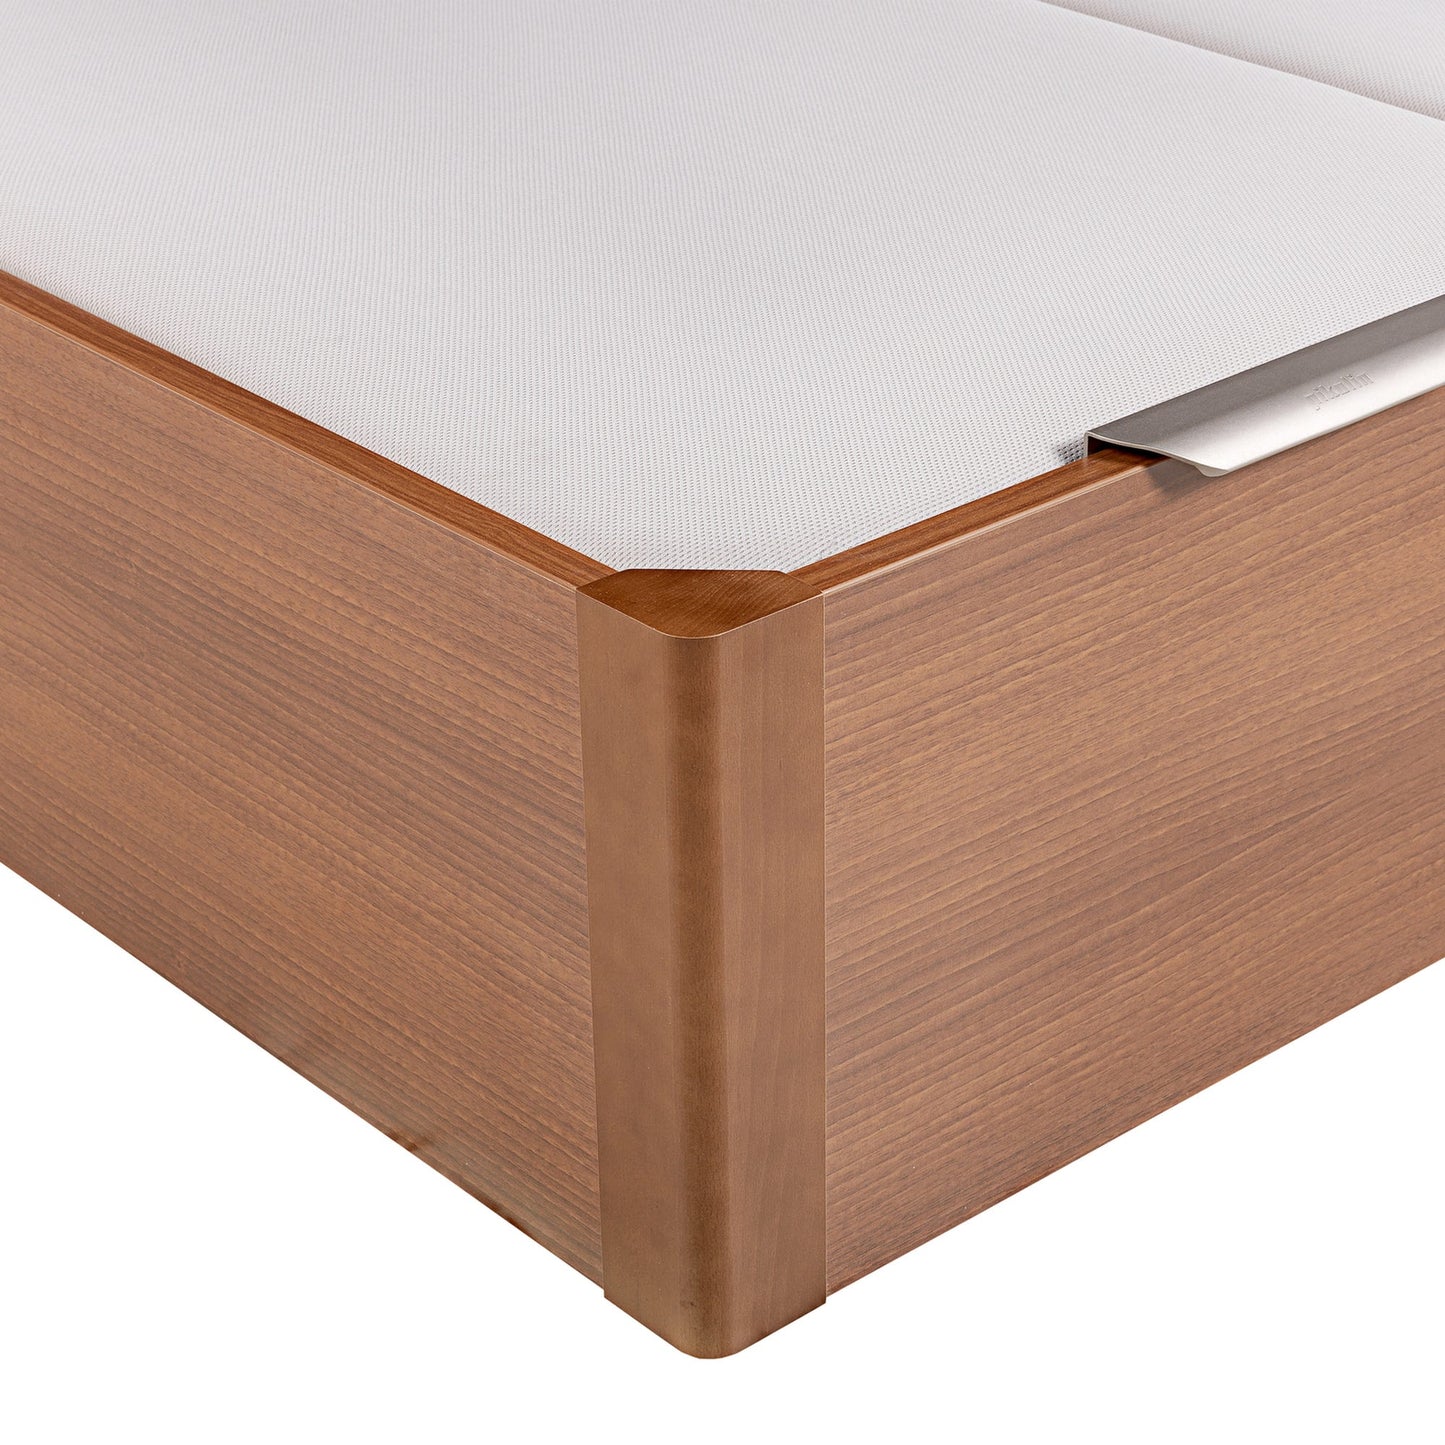 Canapé abatible de madera de alta capacidad tapa doble de color cerezo - DESIGN - 200x182